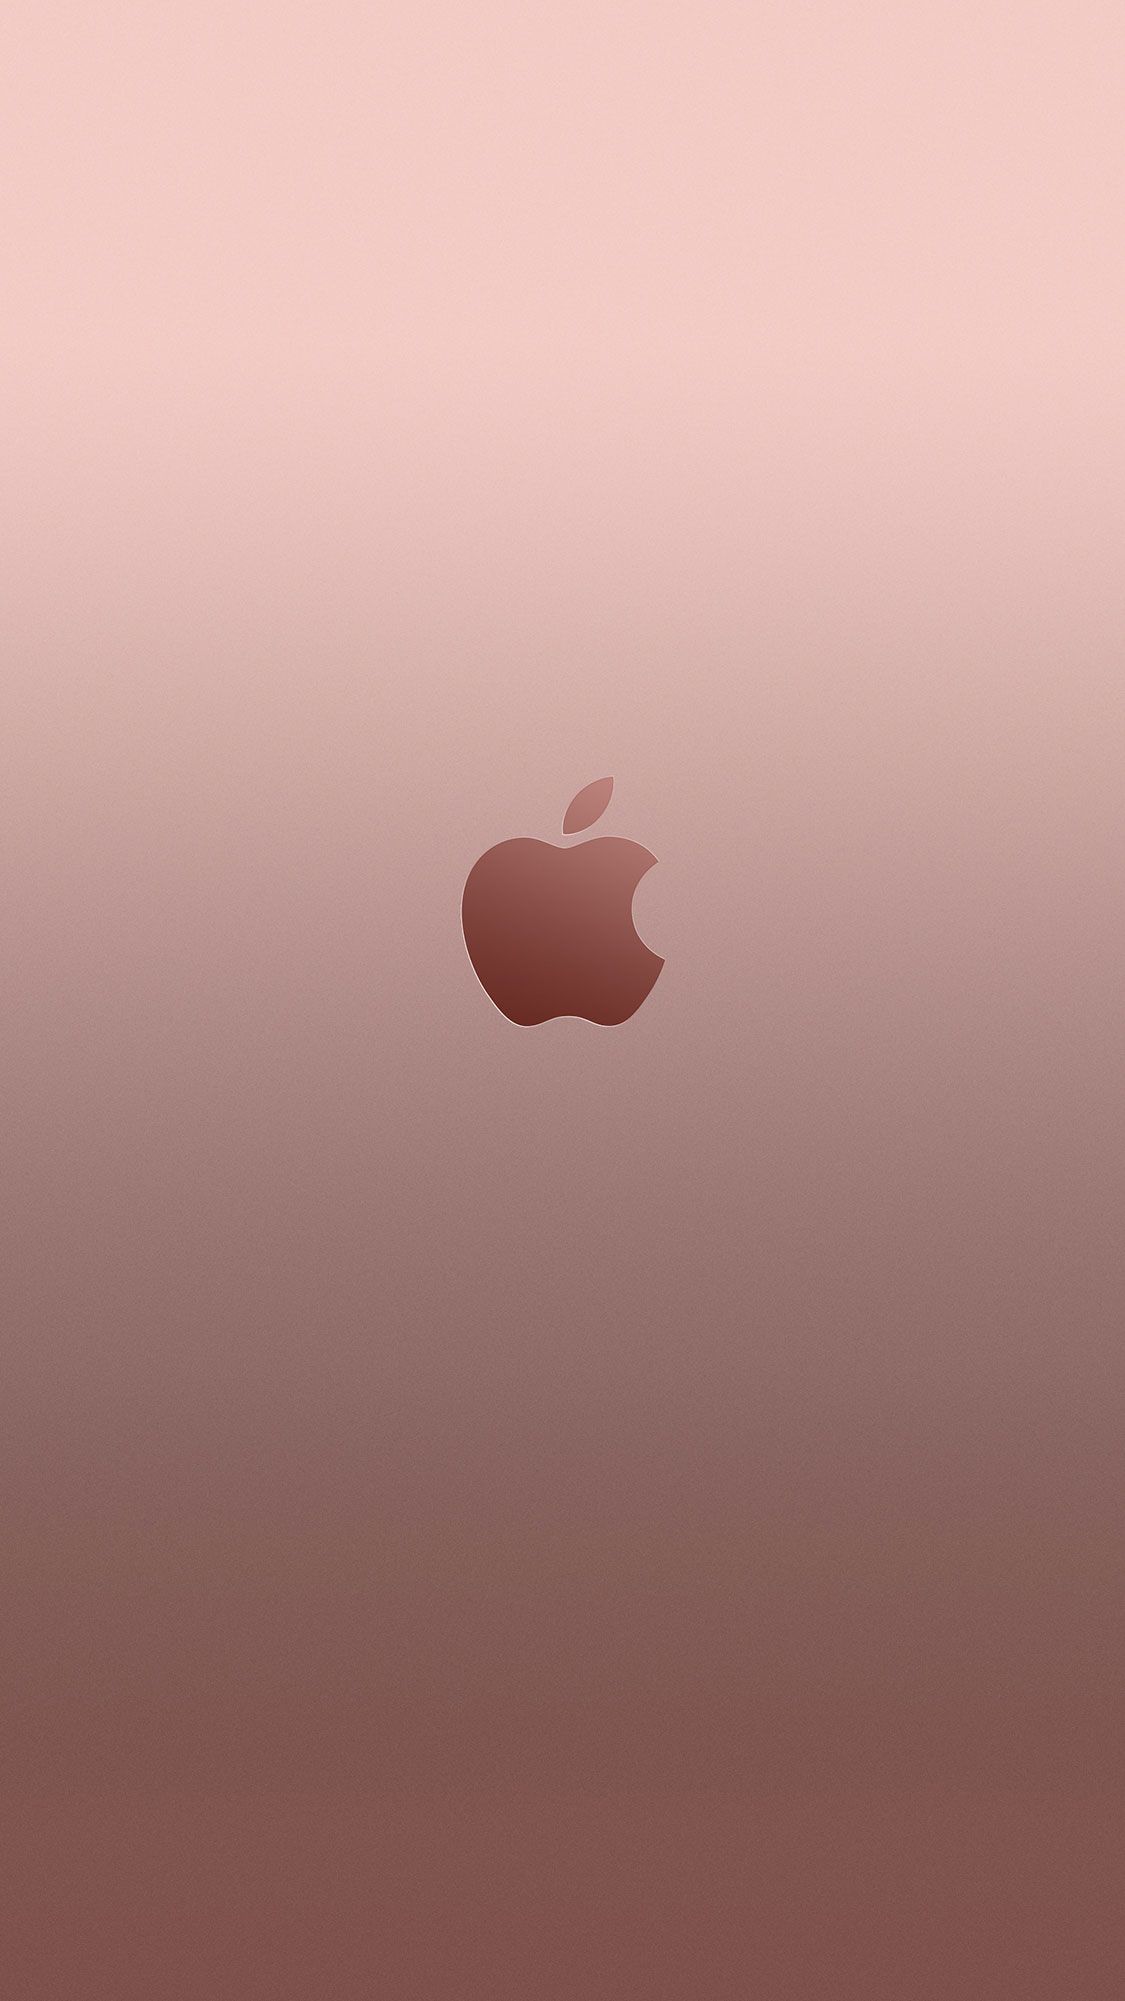 iphone 6s壁紙tumblr,ピンク,空,心臓,図,穏やかな